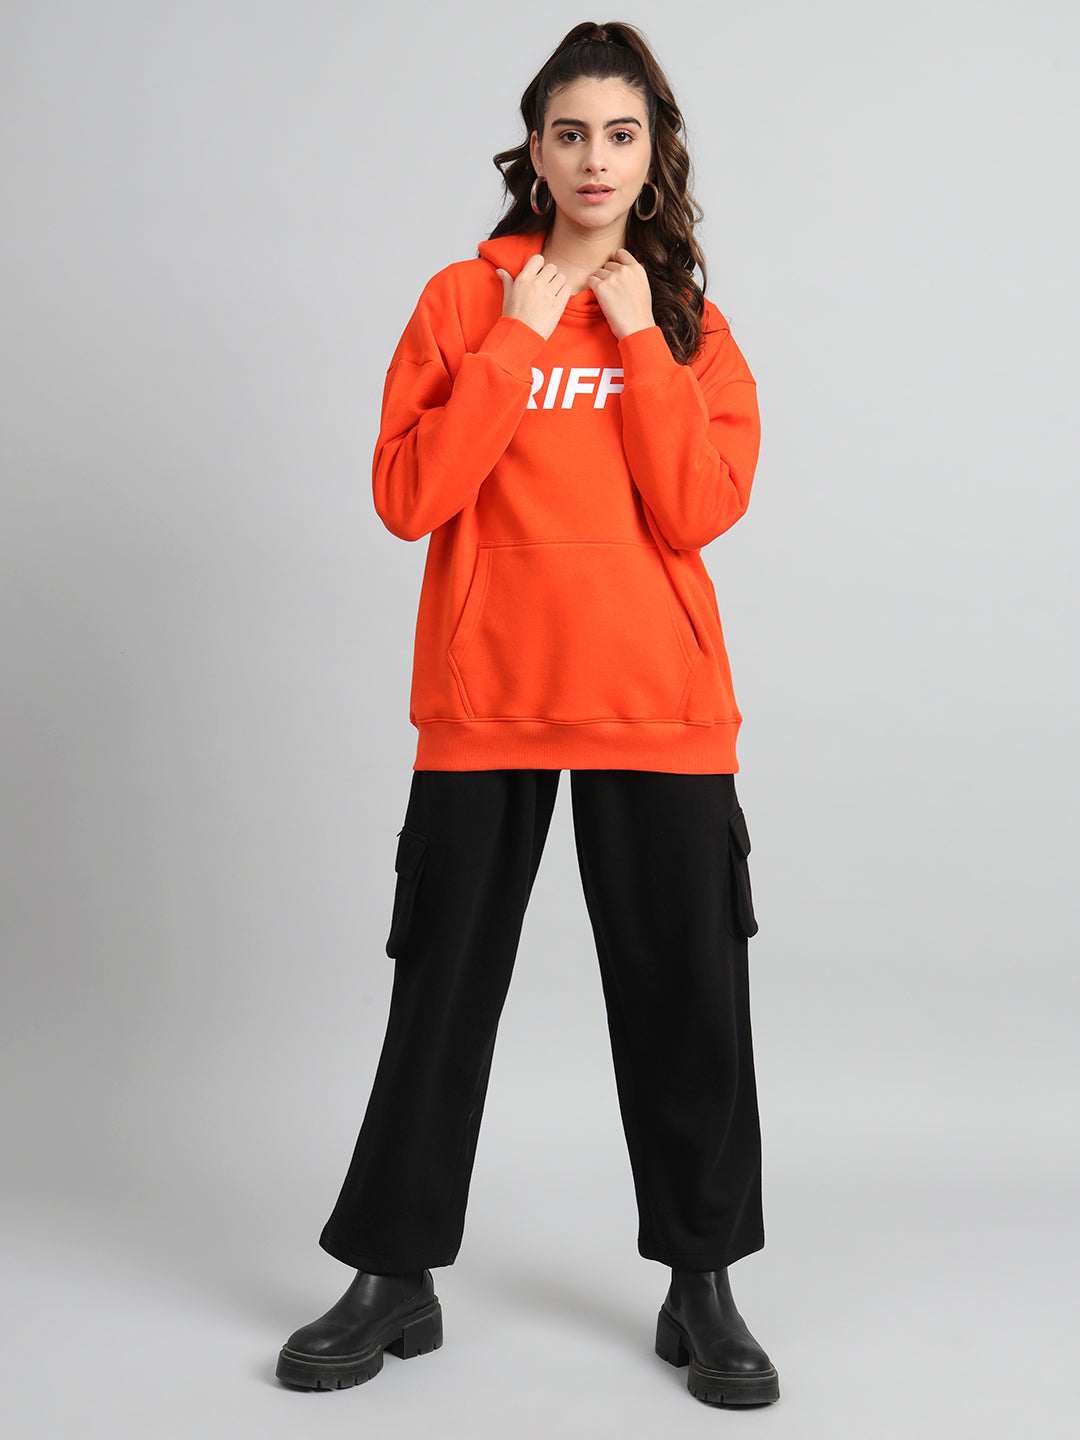 Griffel Women Regular Fit Mauve Front Logo 100% Cotton Fleece Hoodie and Joggers Full set Tacksuit - griffel